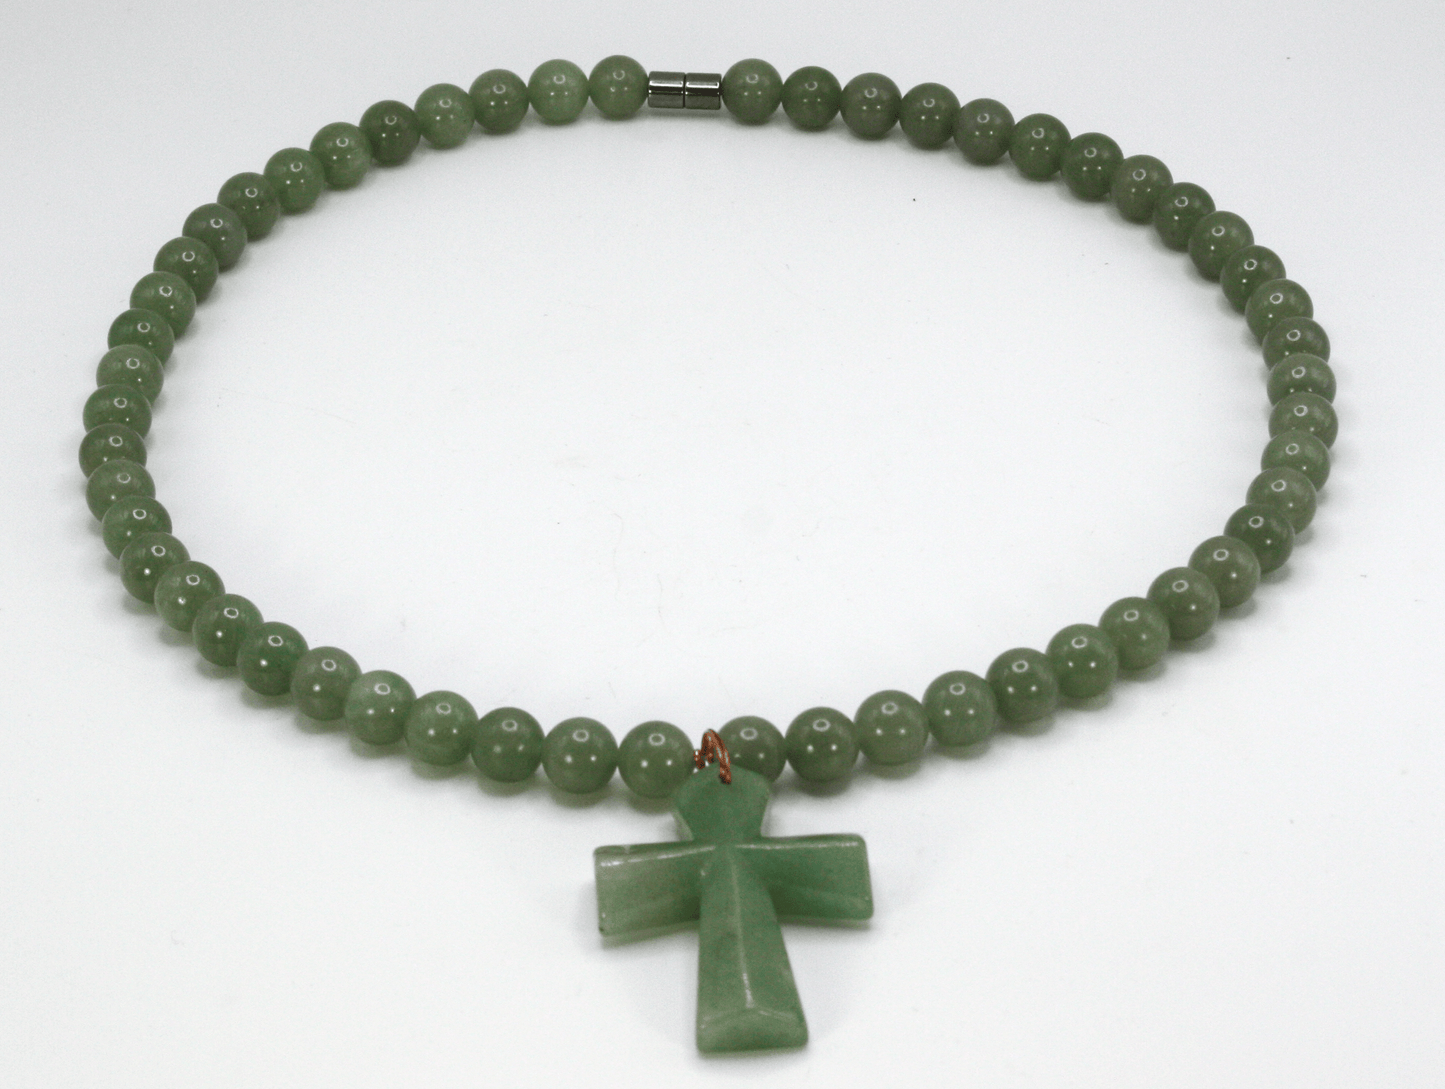 Genuine Aventurine Pendant Necklace - Gift for Men/Woman - Spiritual Accessories - Religious Symbol